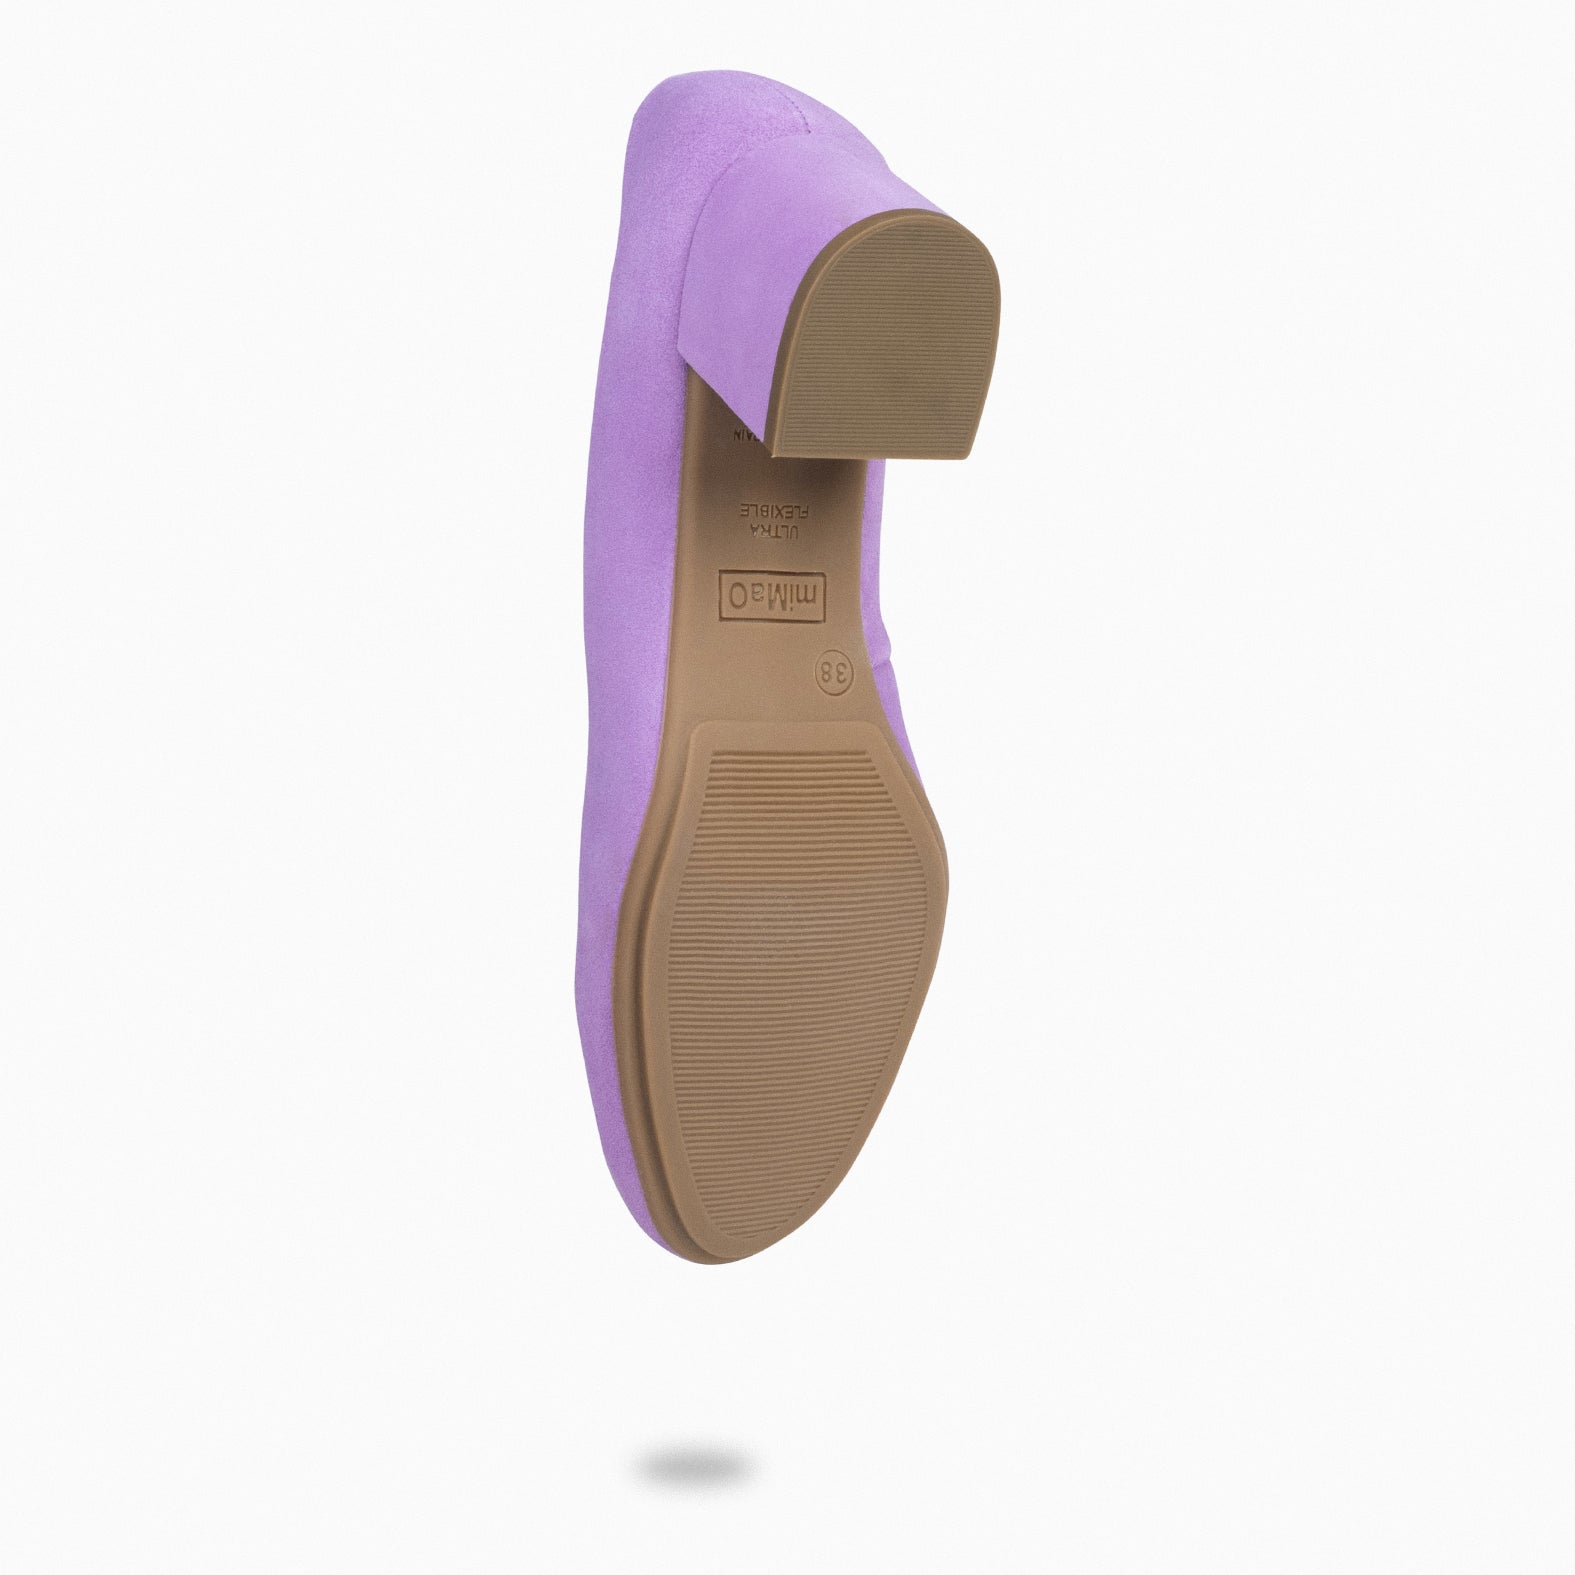 URBAN ROUND – PURPLE suede leather low heels